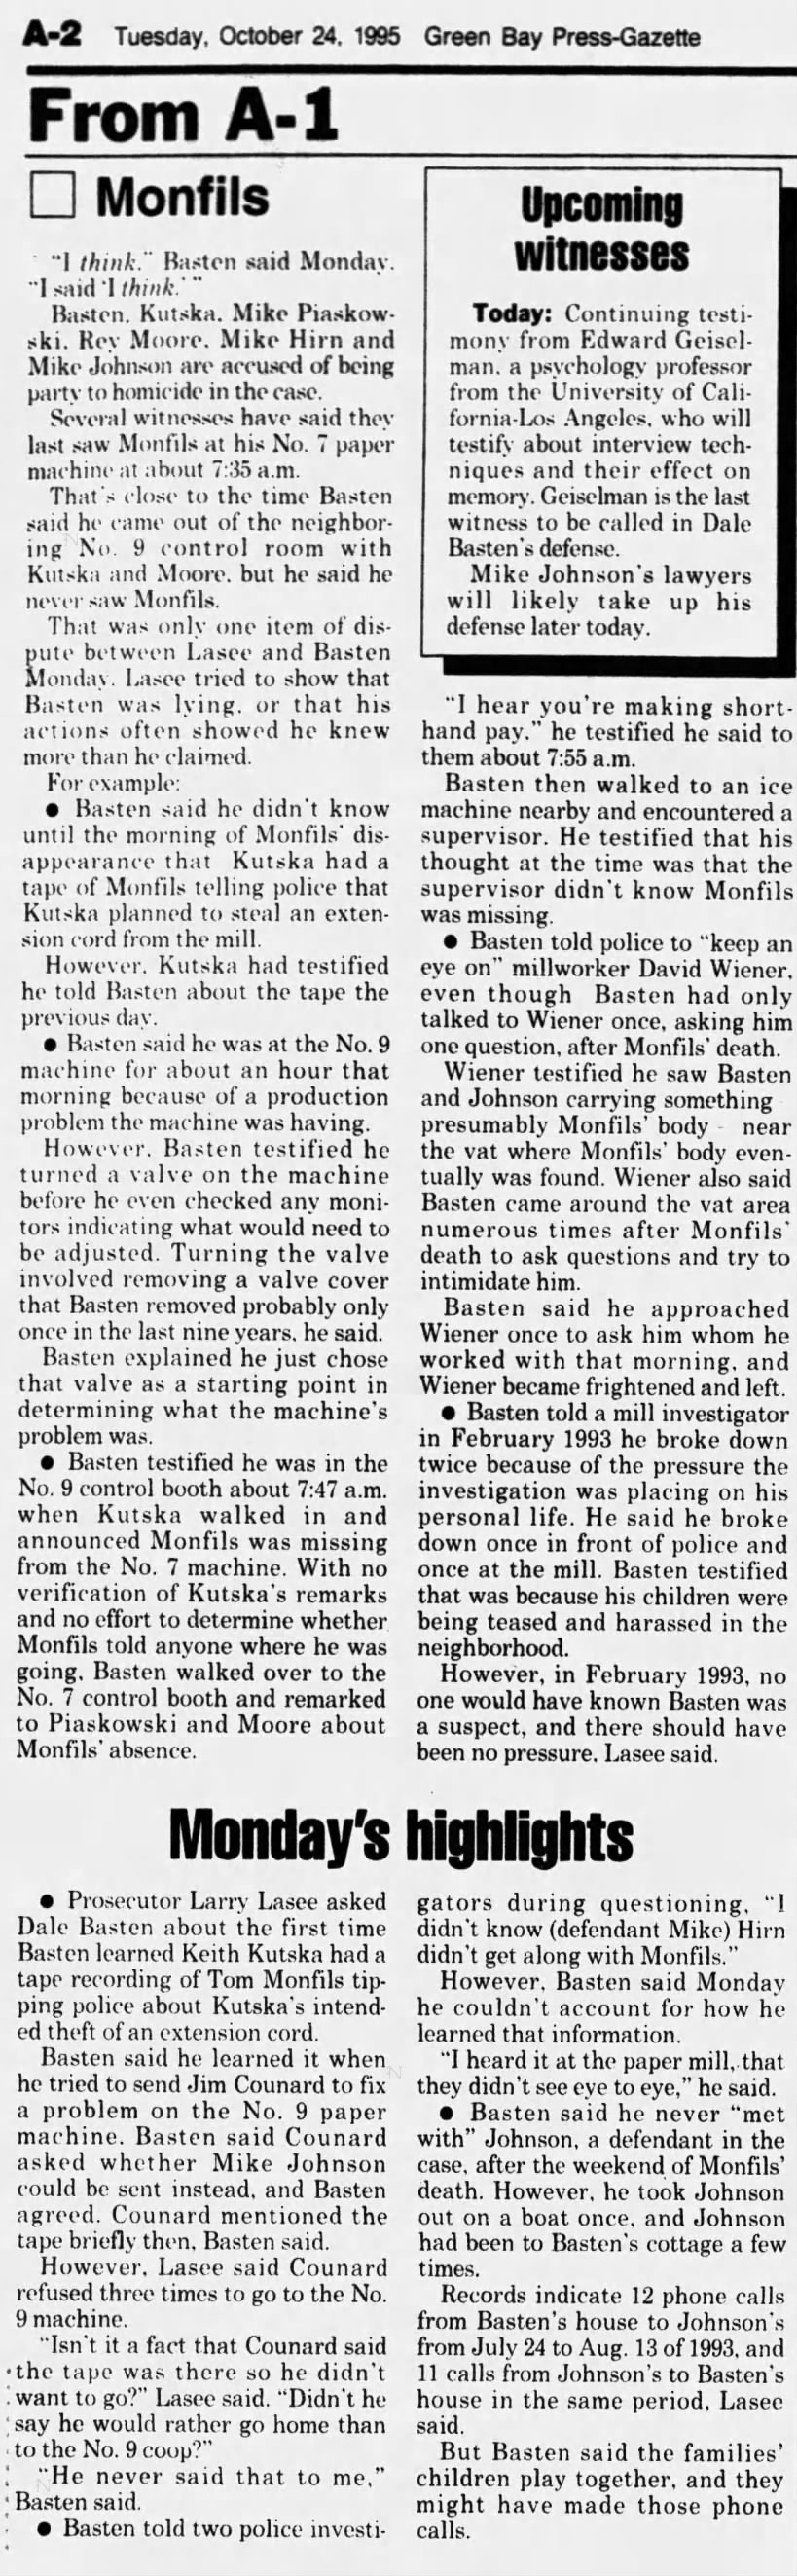 Oct 23, 1995, Monfils Homicide: Prosecutors hammer Basten Credibility pg 1